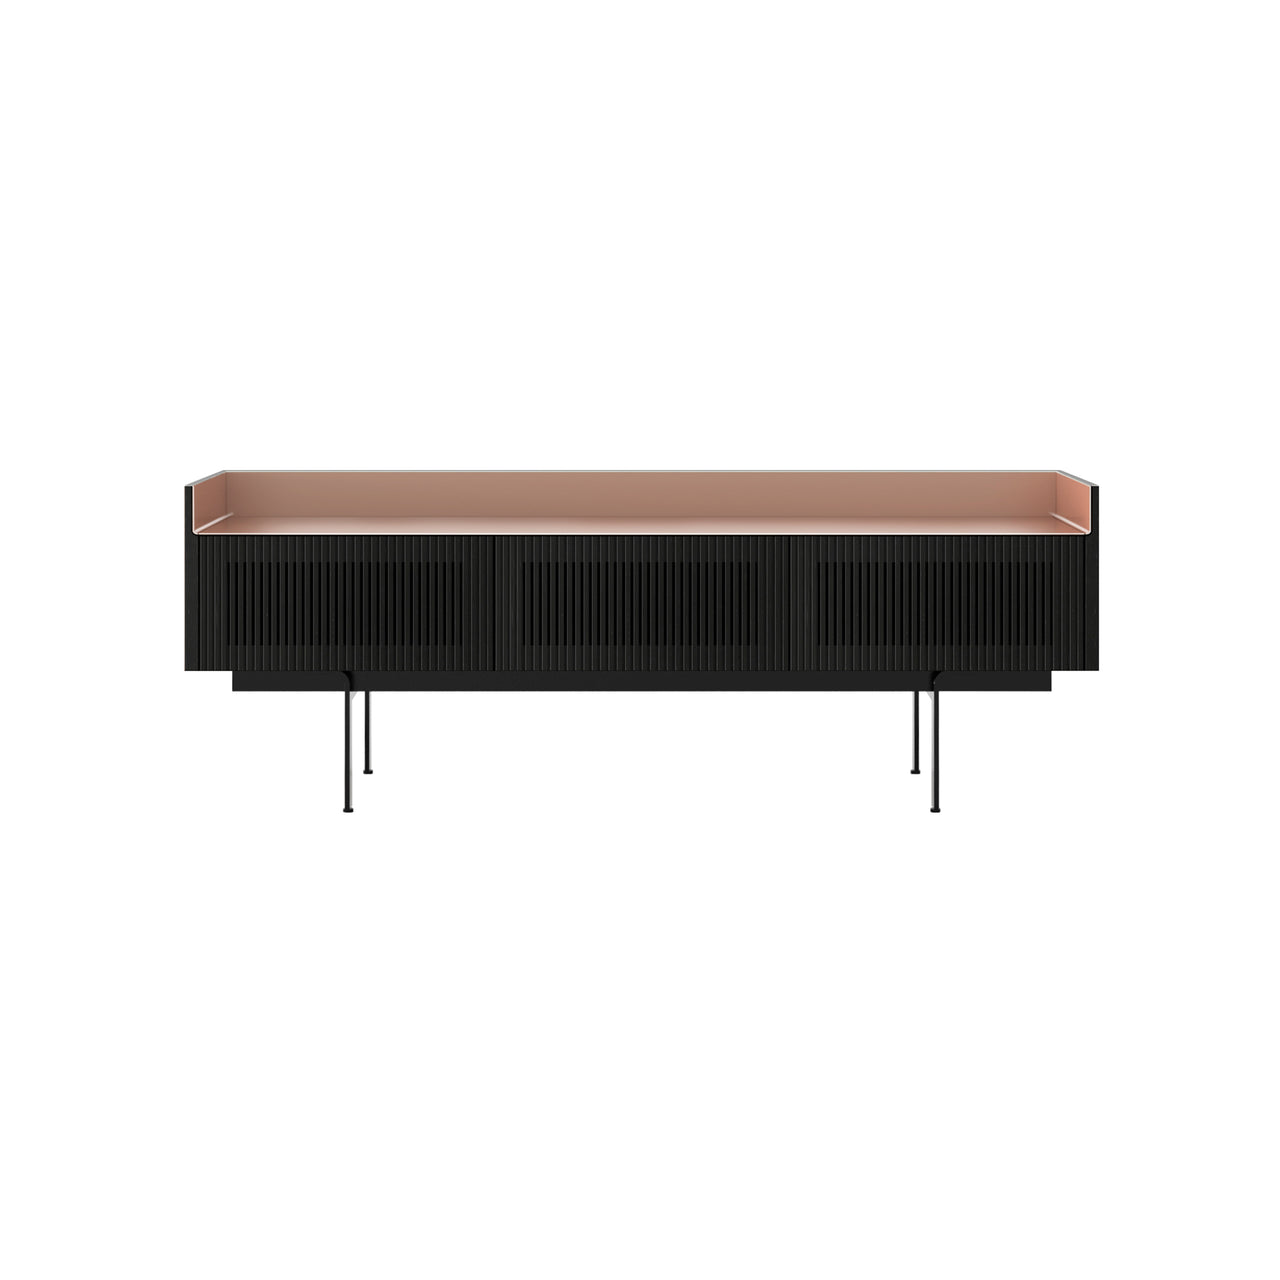 Stockholm Slim Sideboard: STH354 +Ebony Stained Oak + Anodized Aluminum Pale Rose + Black